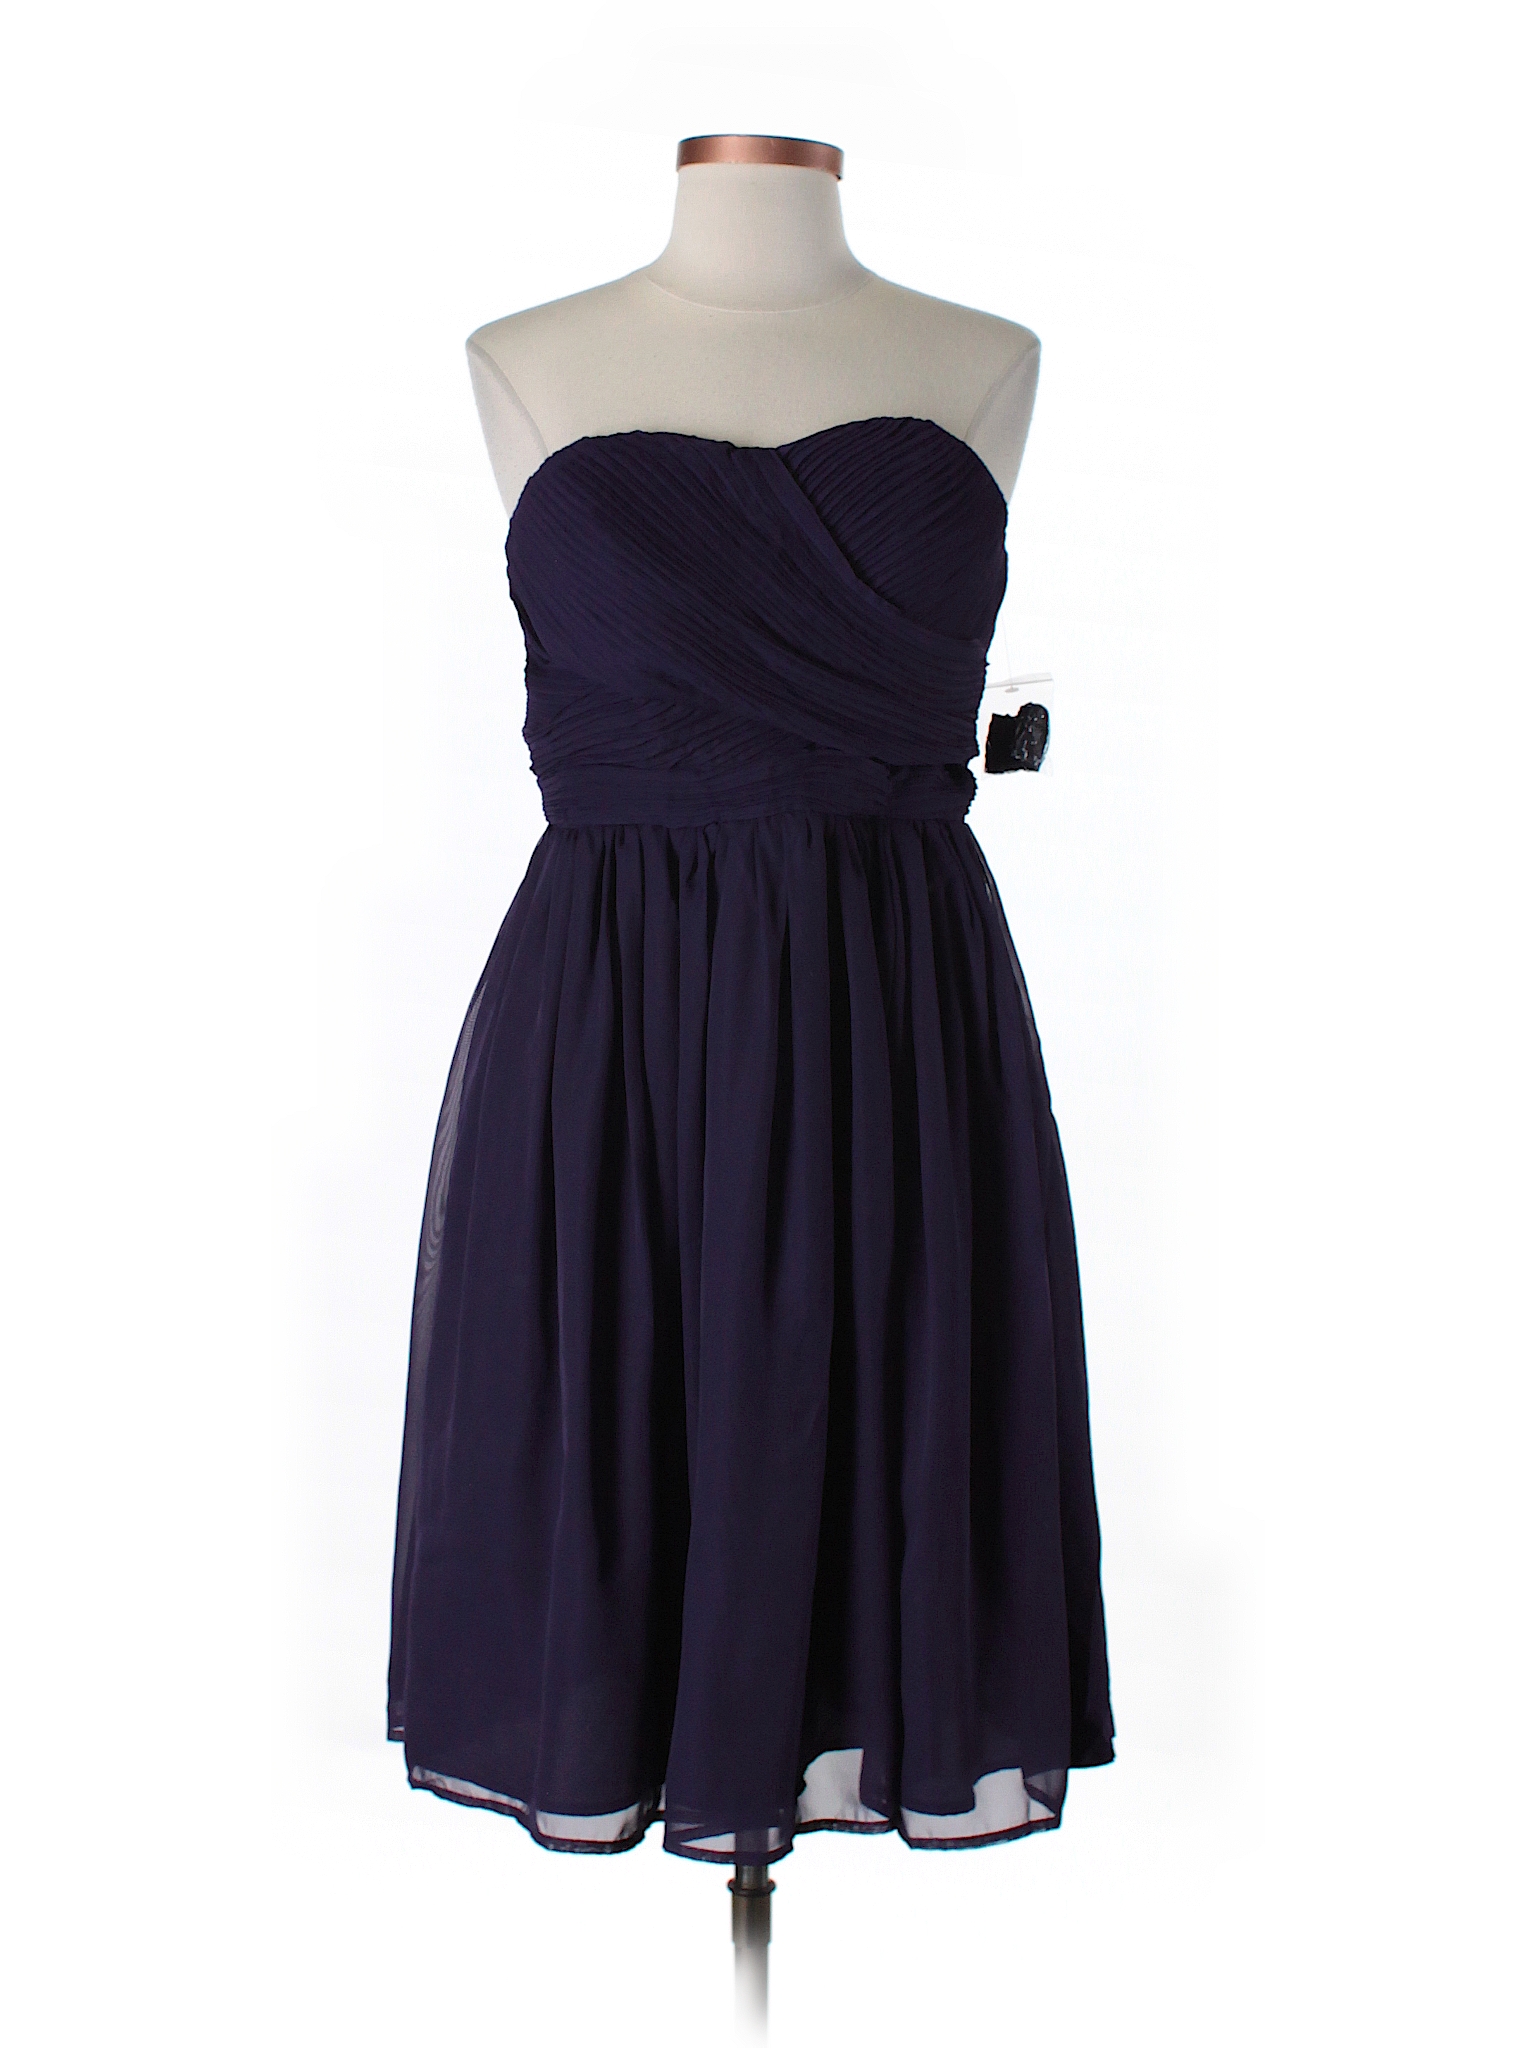 Tevolio 100% Polyester Solid Dark Purple Cocktail Dress Size 8 - 75% ...